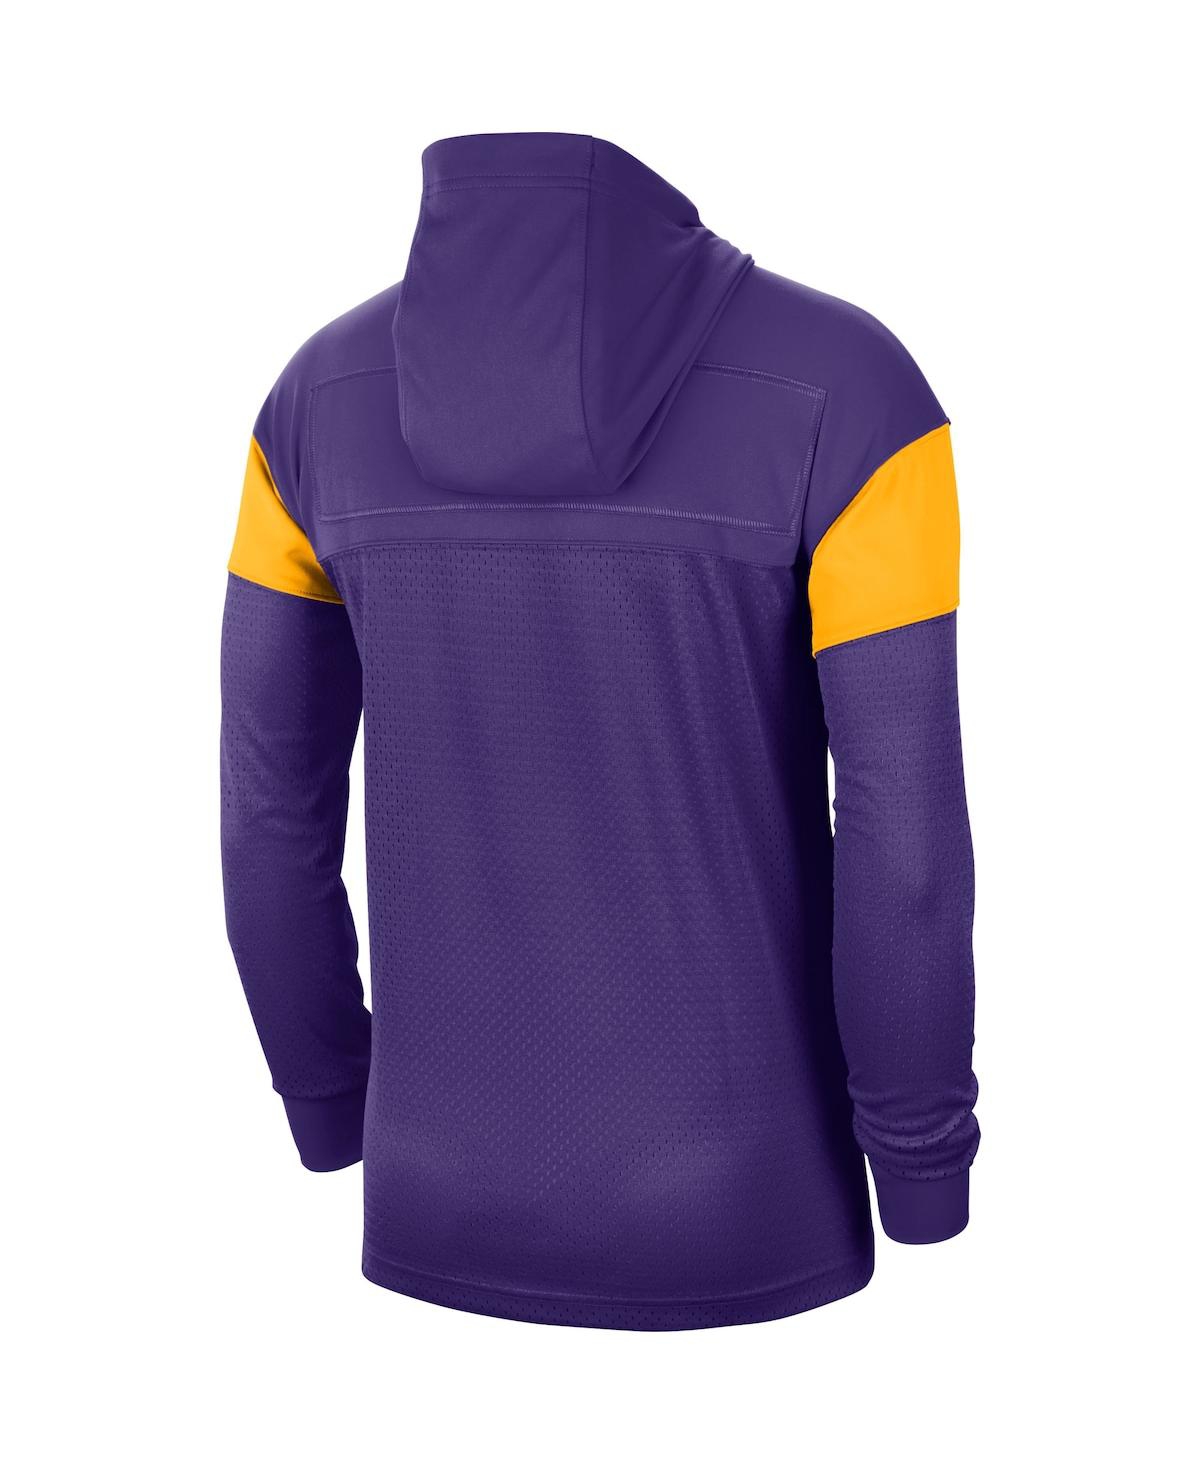 Shop Nike Men's Purple Lsu Tigers Sideline Jersey Pullover Hoodie